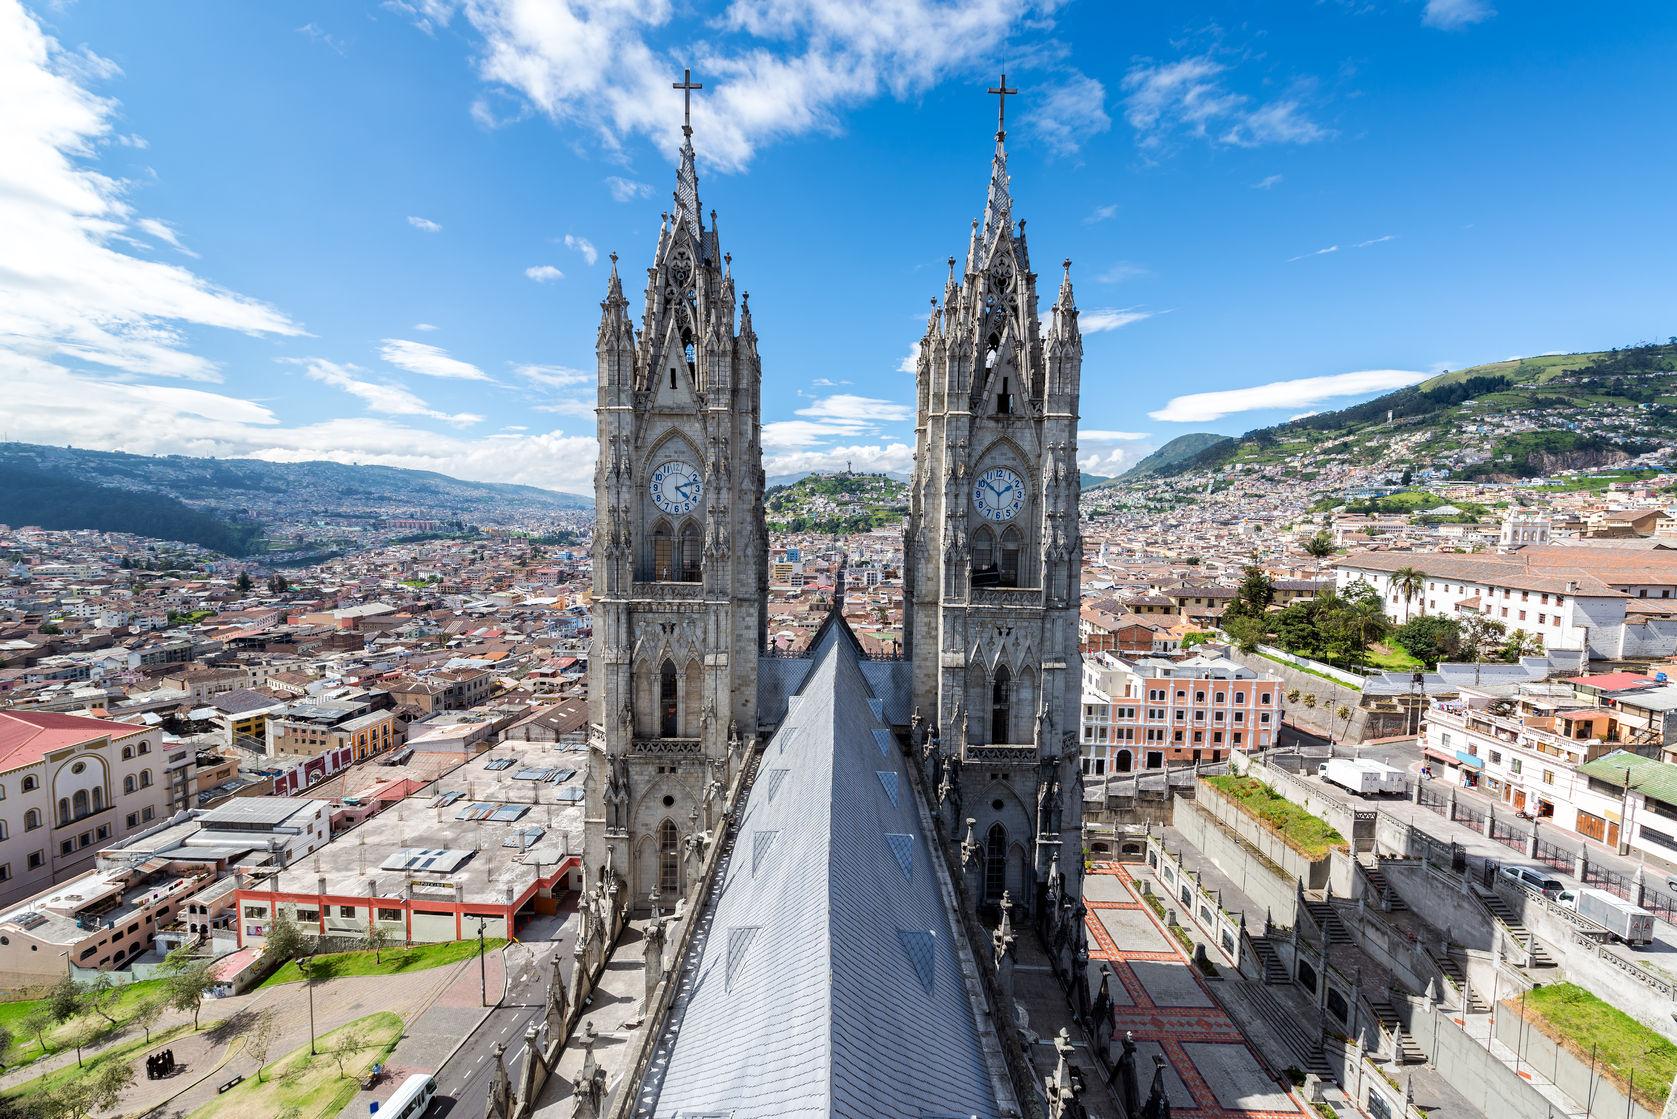 The Quito city, cover photo